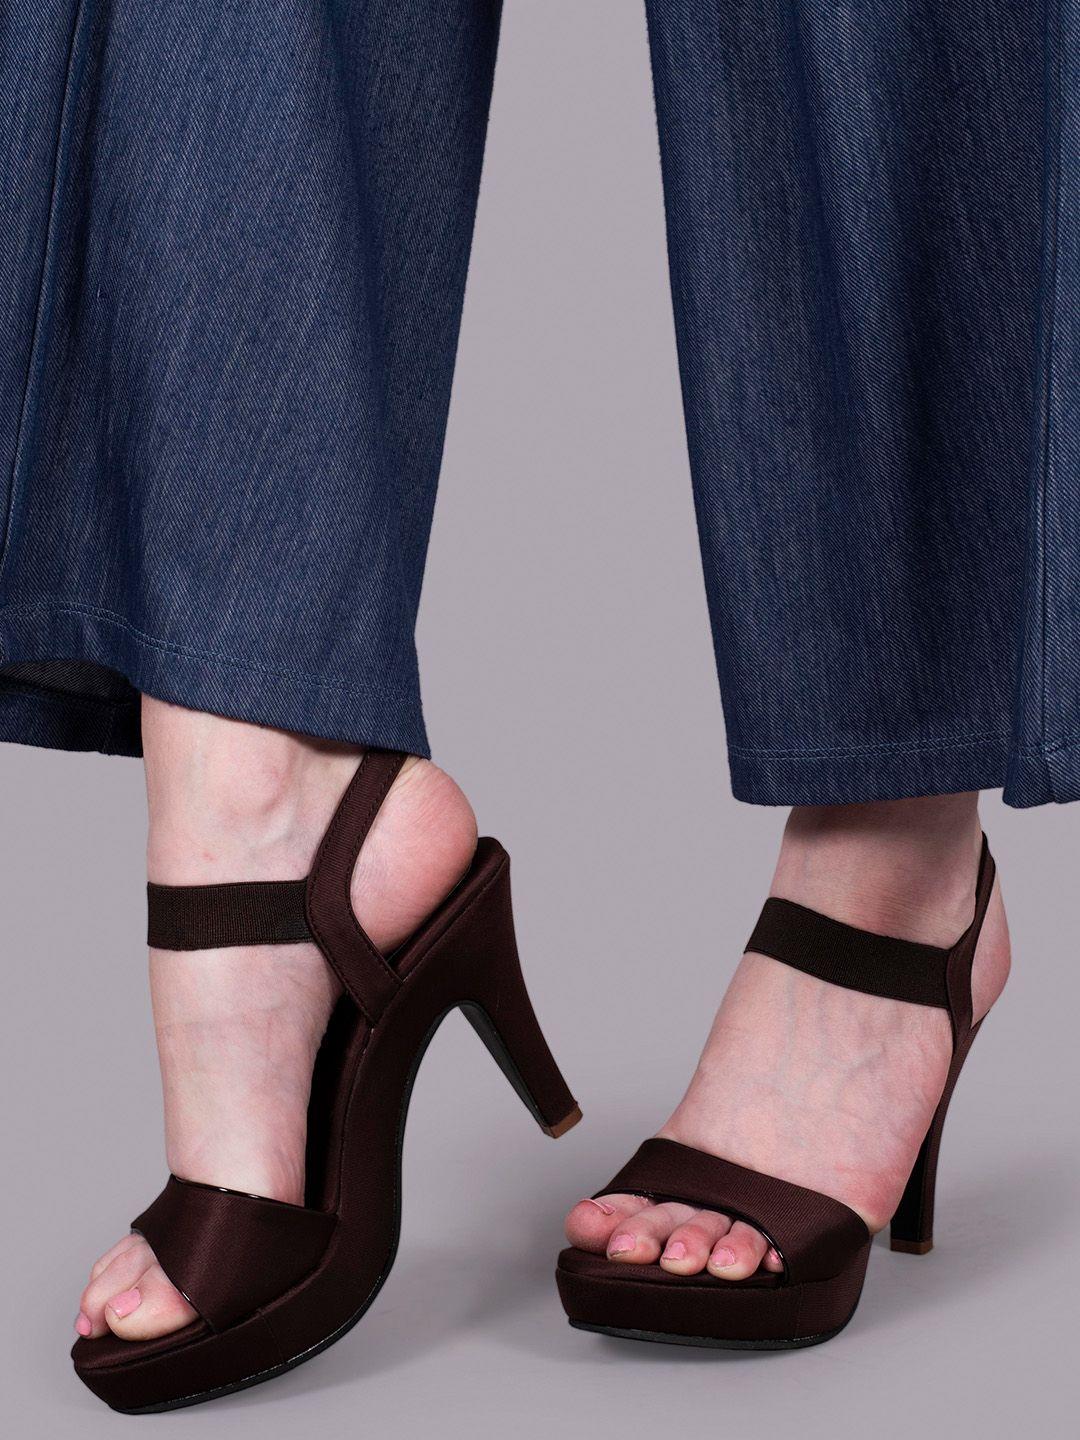 aroom open toe platform heels with backstrap